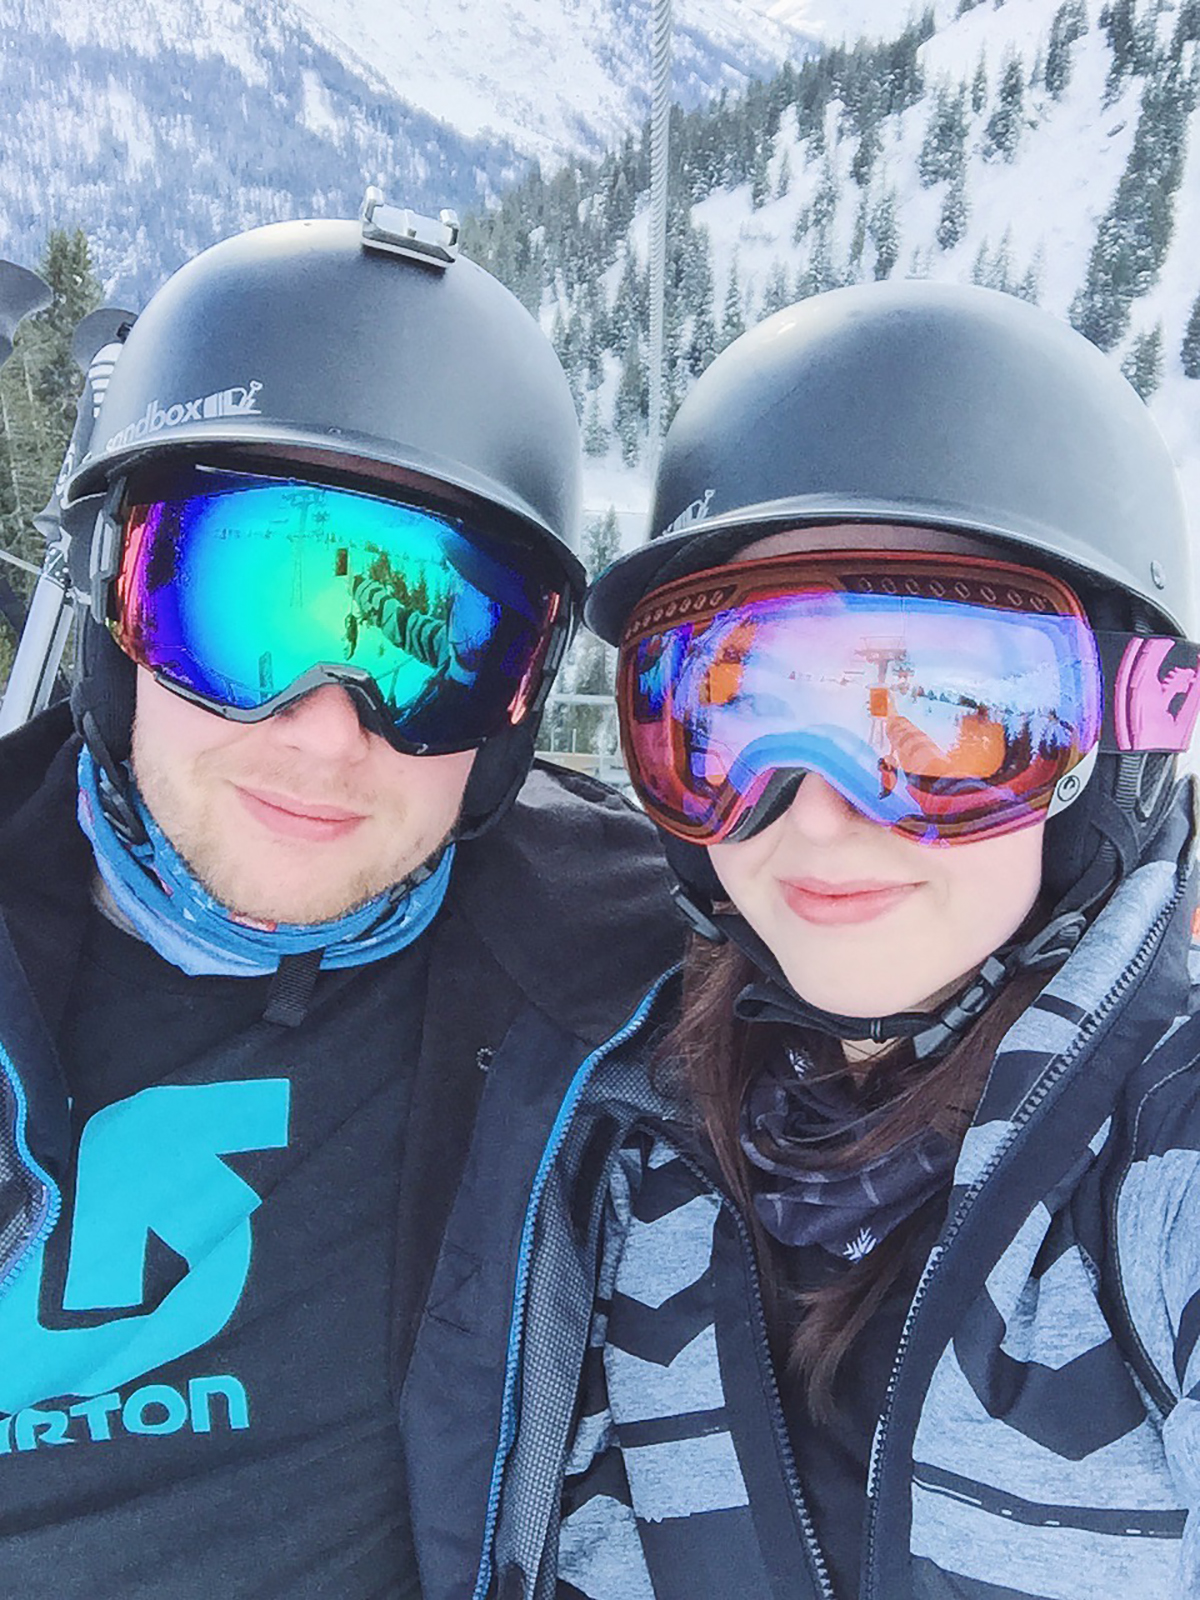 st-anton-lift-skiing-selfie